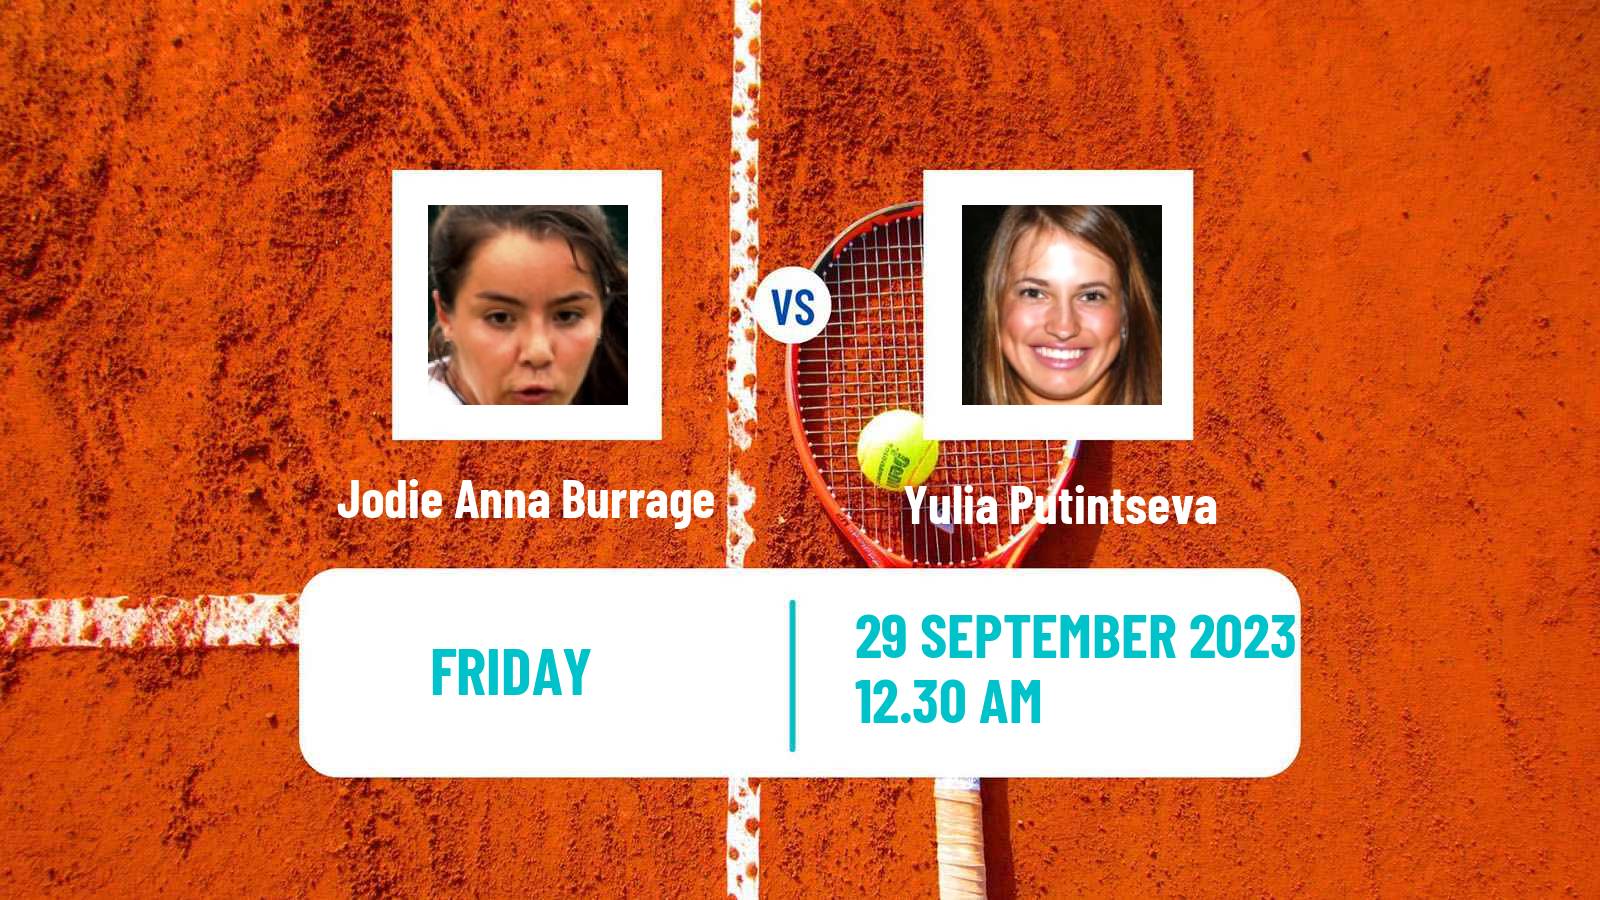 Tennis WTA Beijing Jodie Anna Burrage - Yulia Putintseva